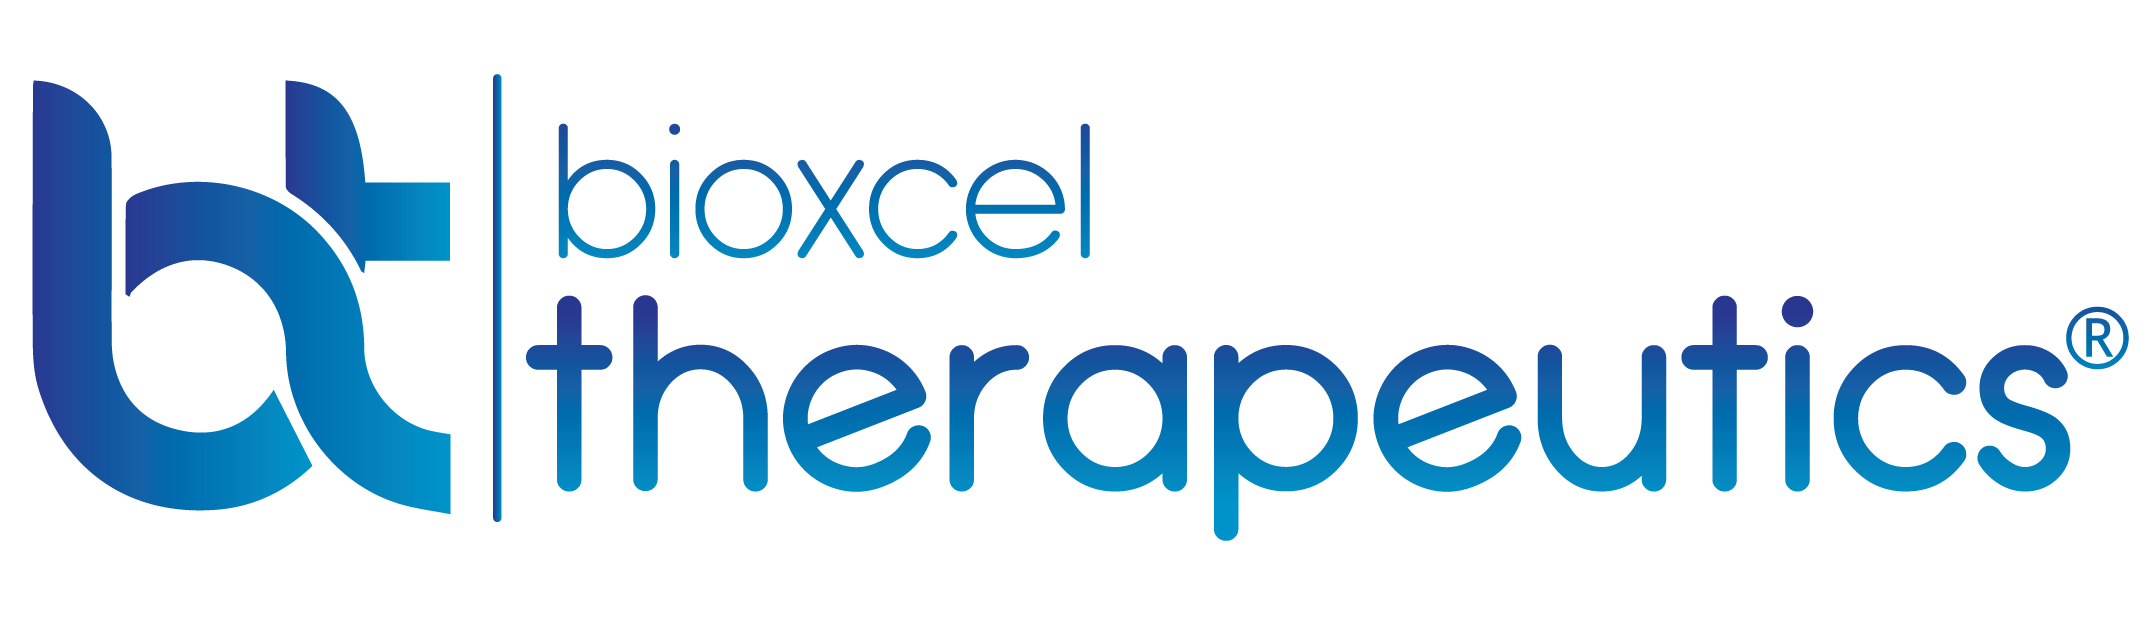 Bioxcel Therapeutics Logo-9.17.21.png